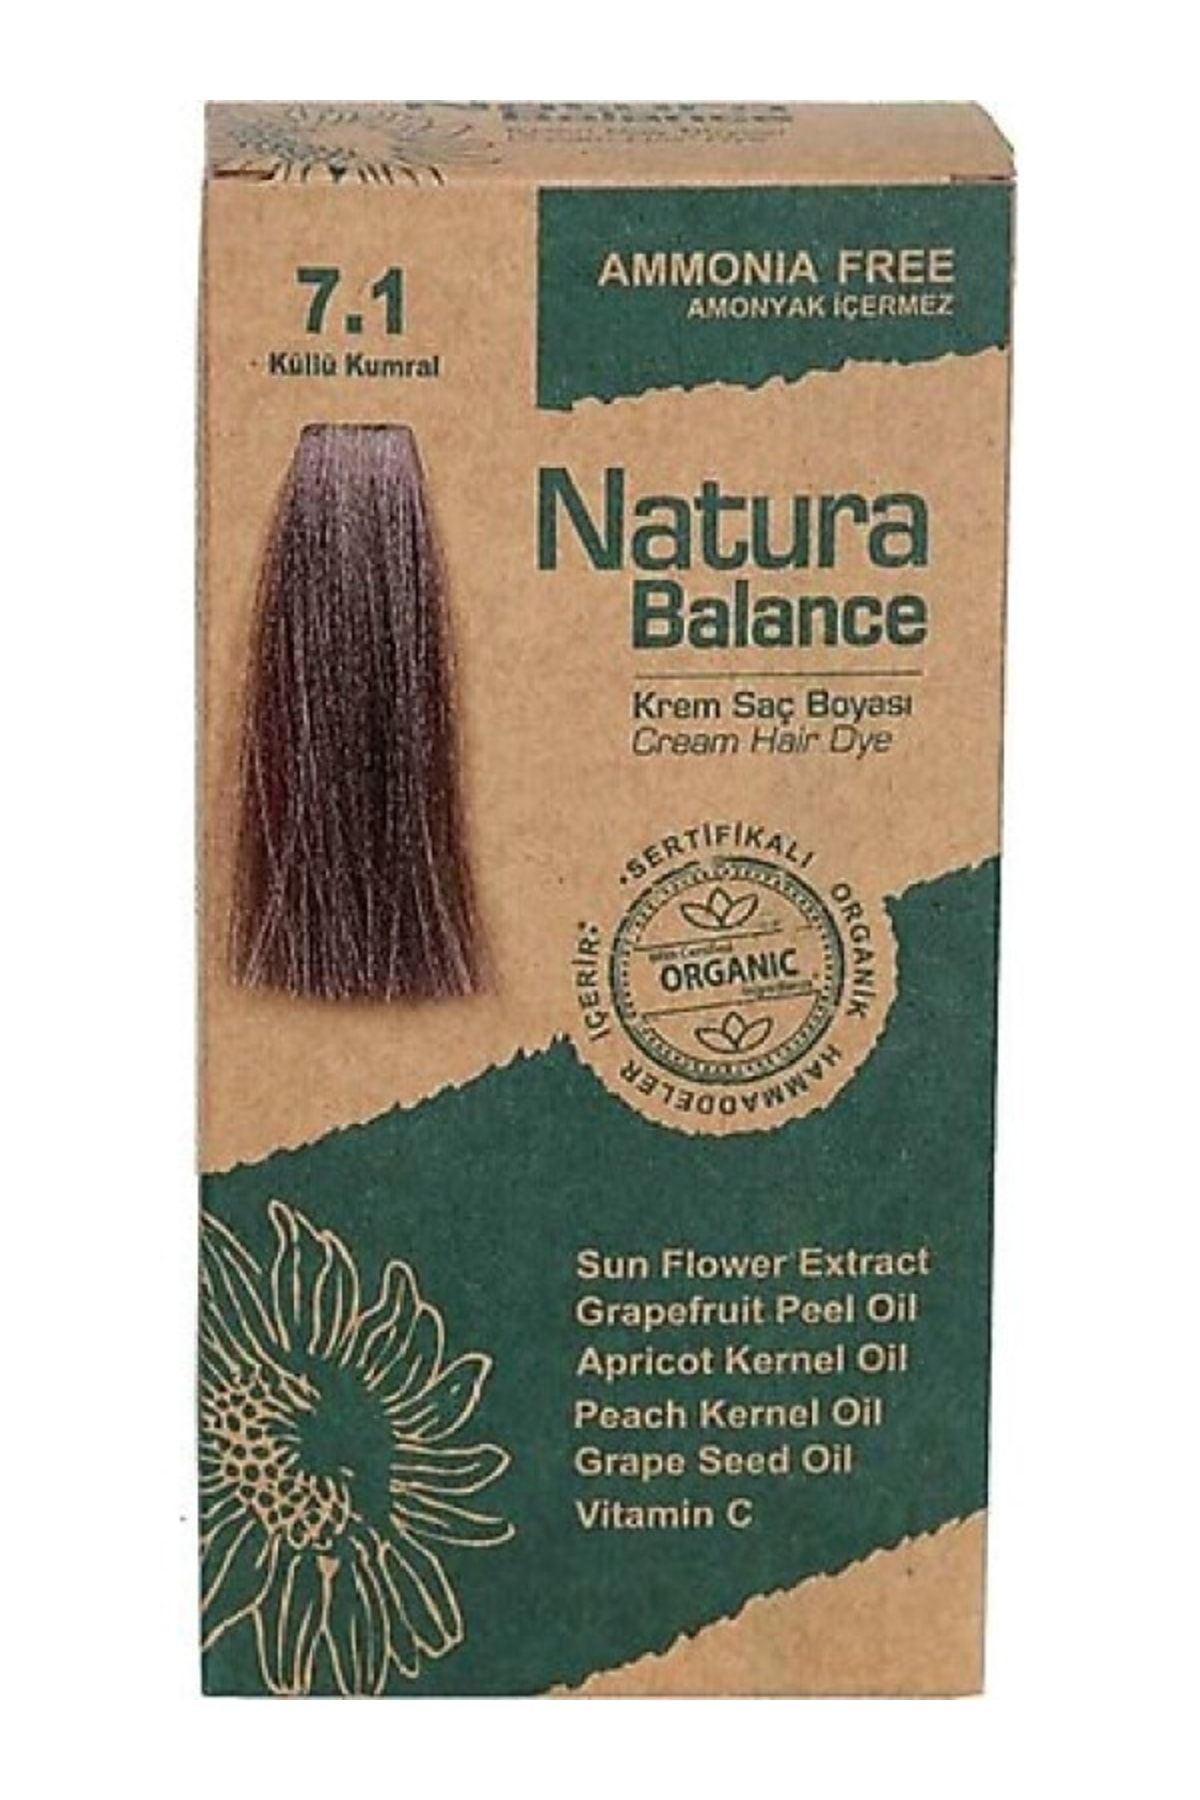 NATURABALANCE Natura Balance Krem Saç Boyası - Organik Sertifikalı Küllü Kumral 7.1